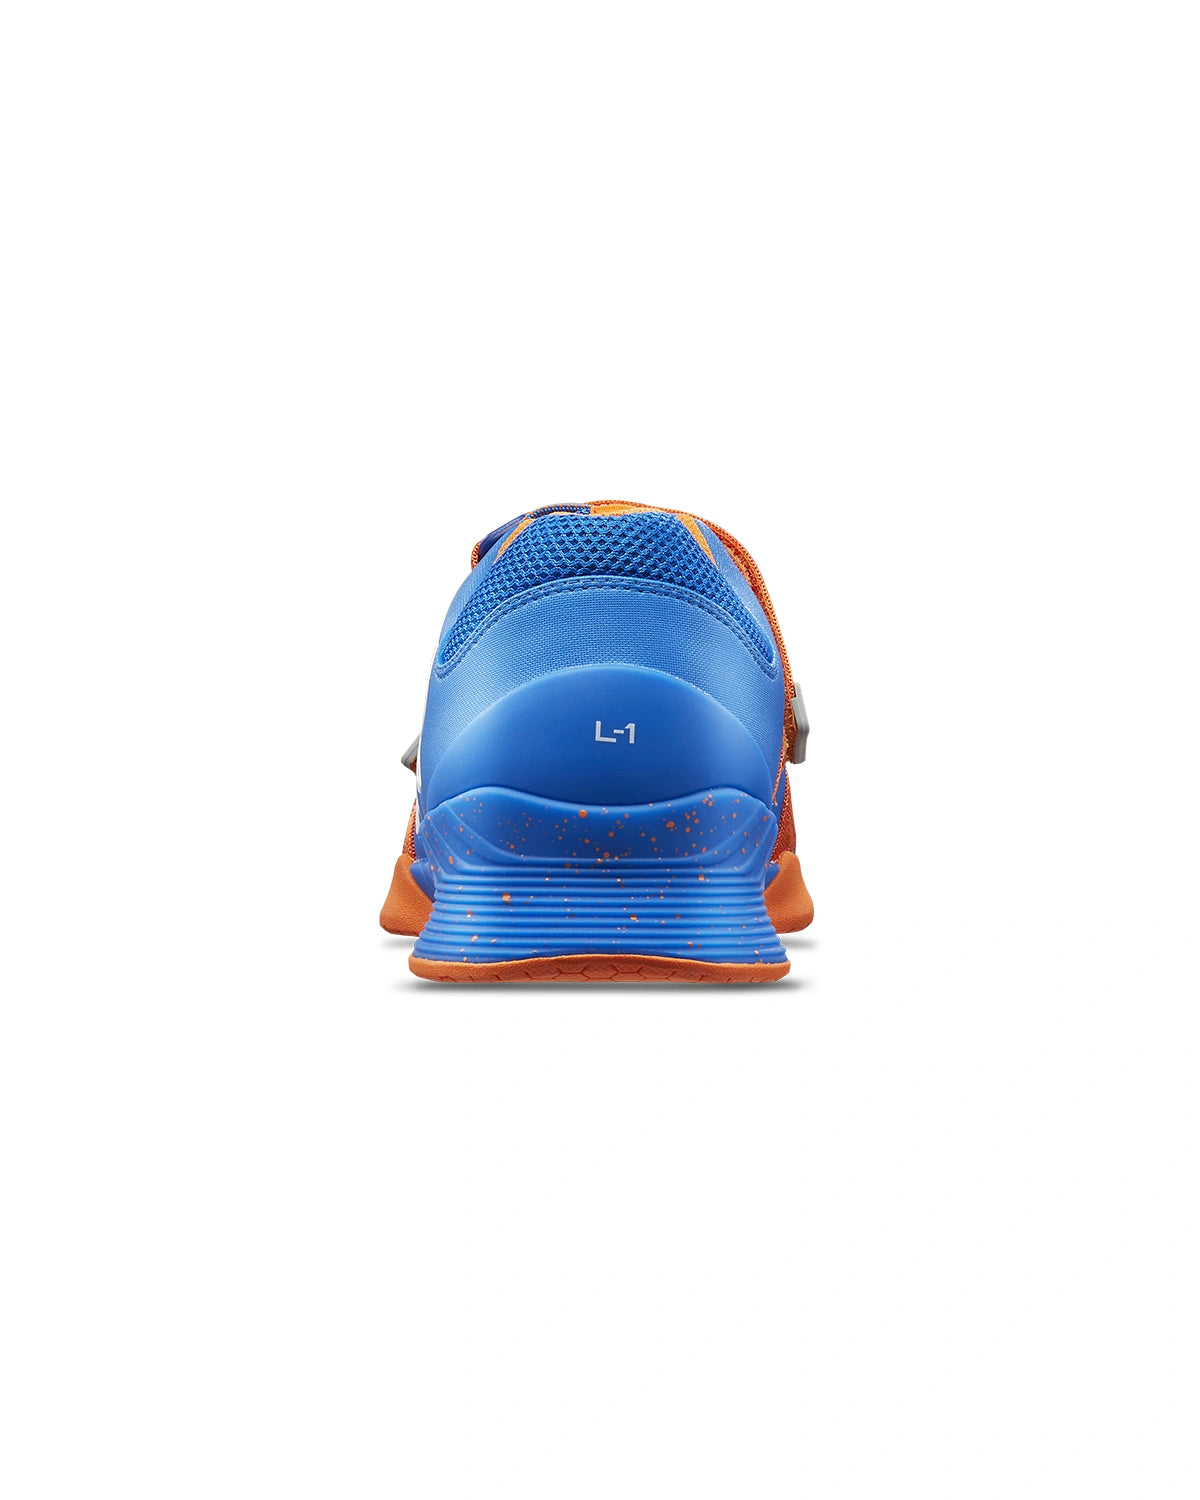 [Pre-Order] TYR L-1 Lifter (Blue/Orange)